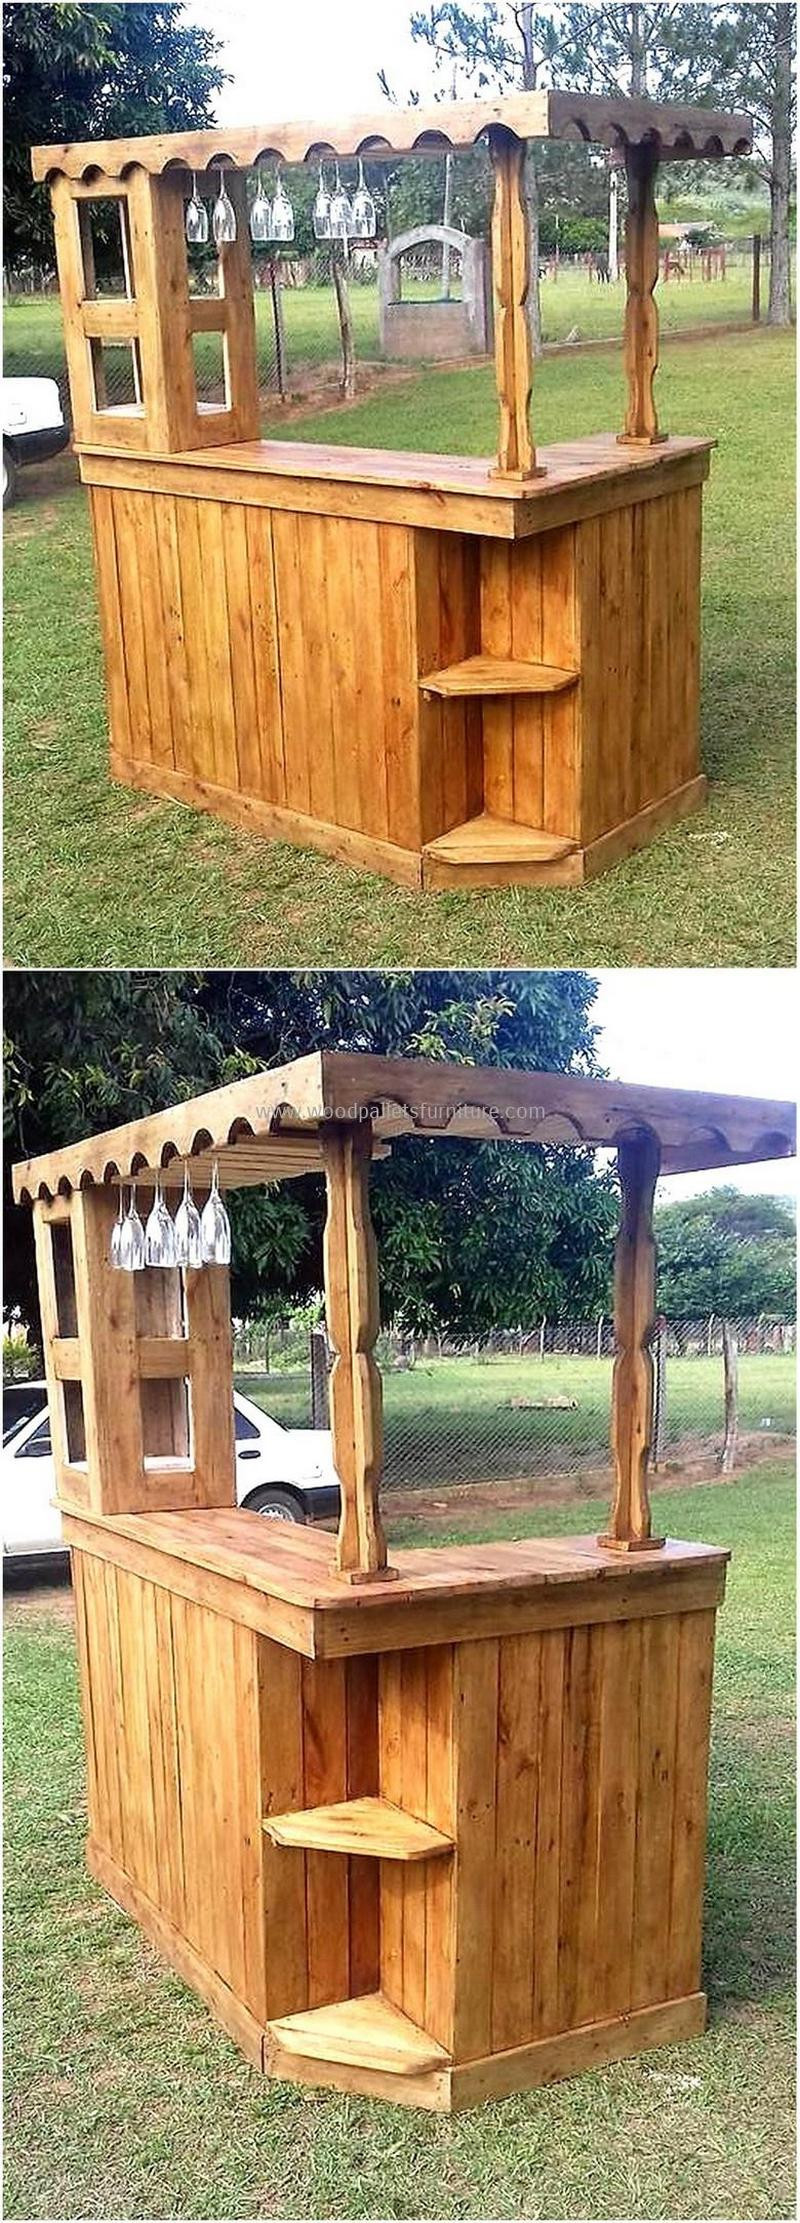 DIY Pallet Bar Plans
 200 DIY Ideas for Wood Pallet Bars